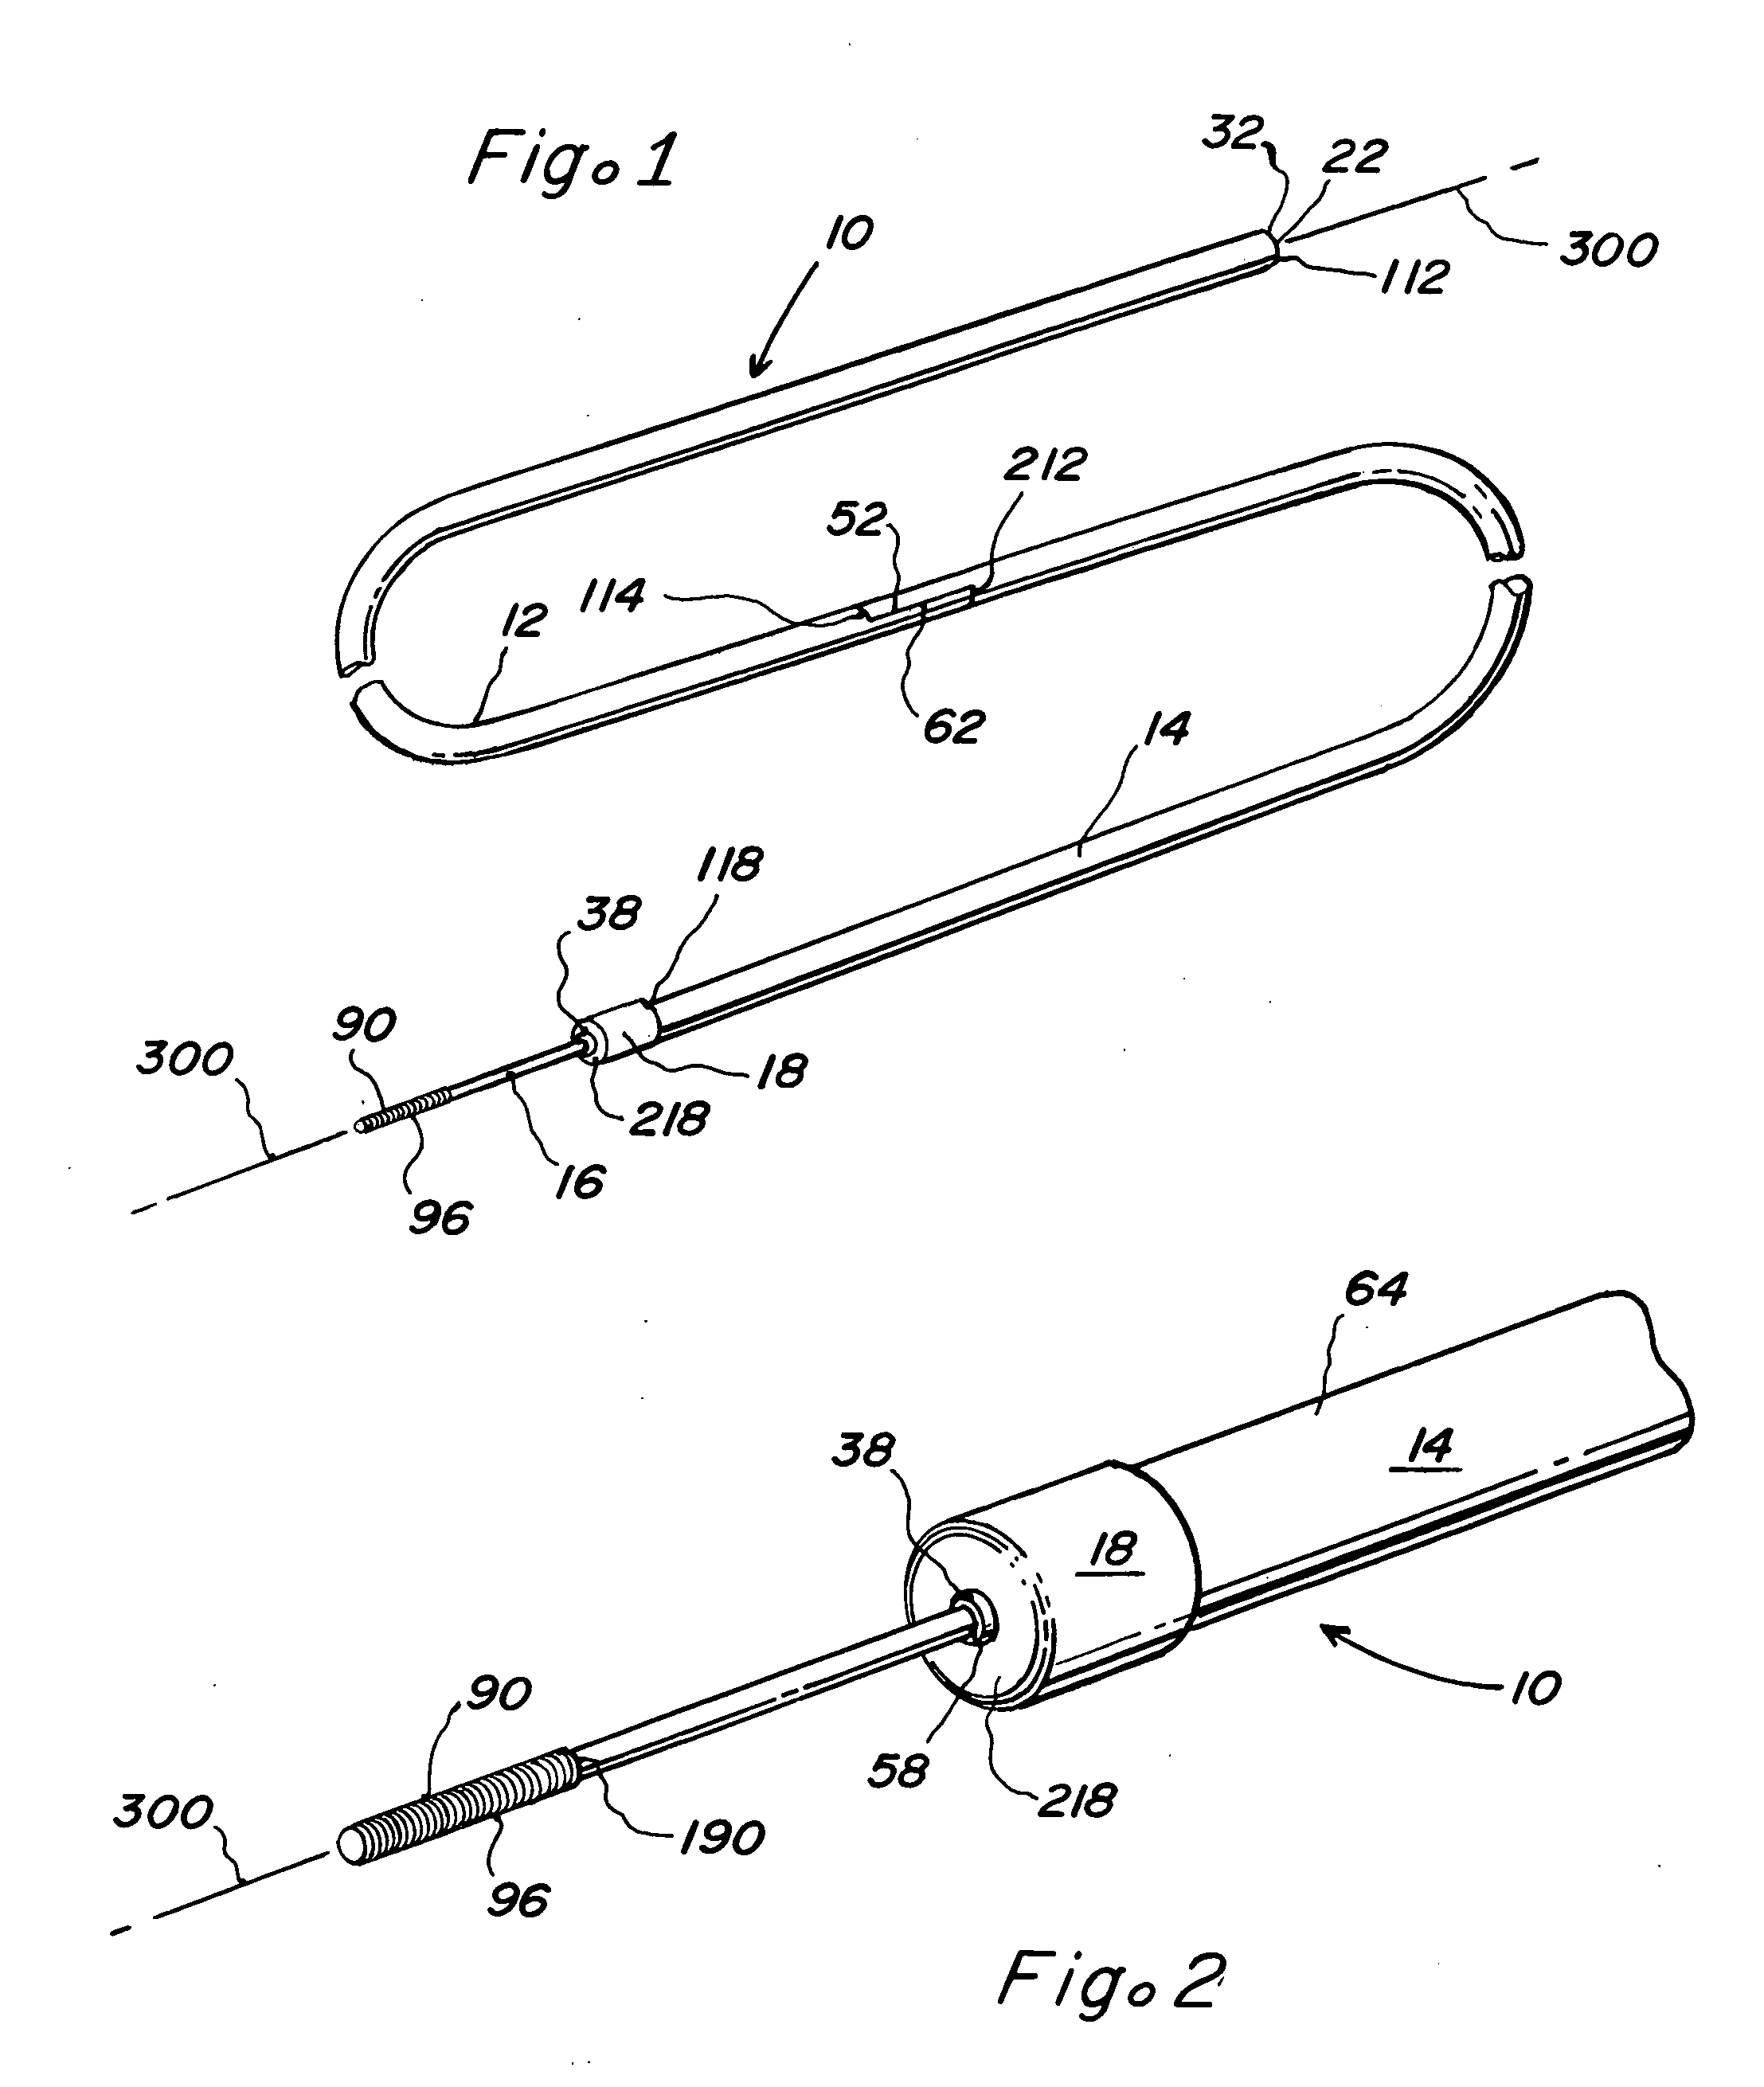 Balloon apparatus and methods